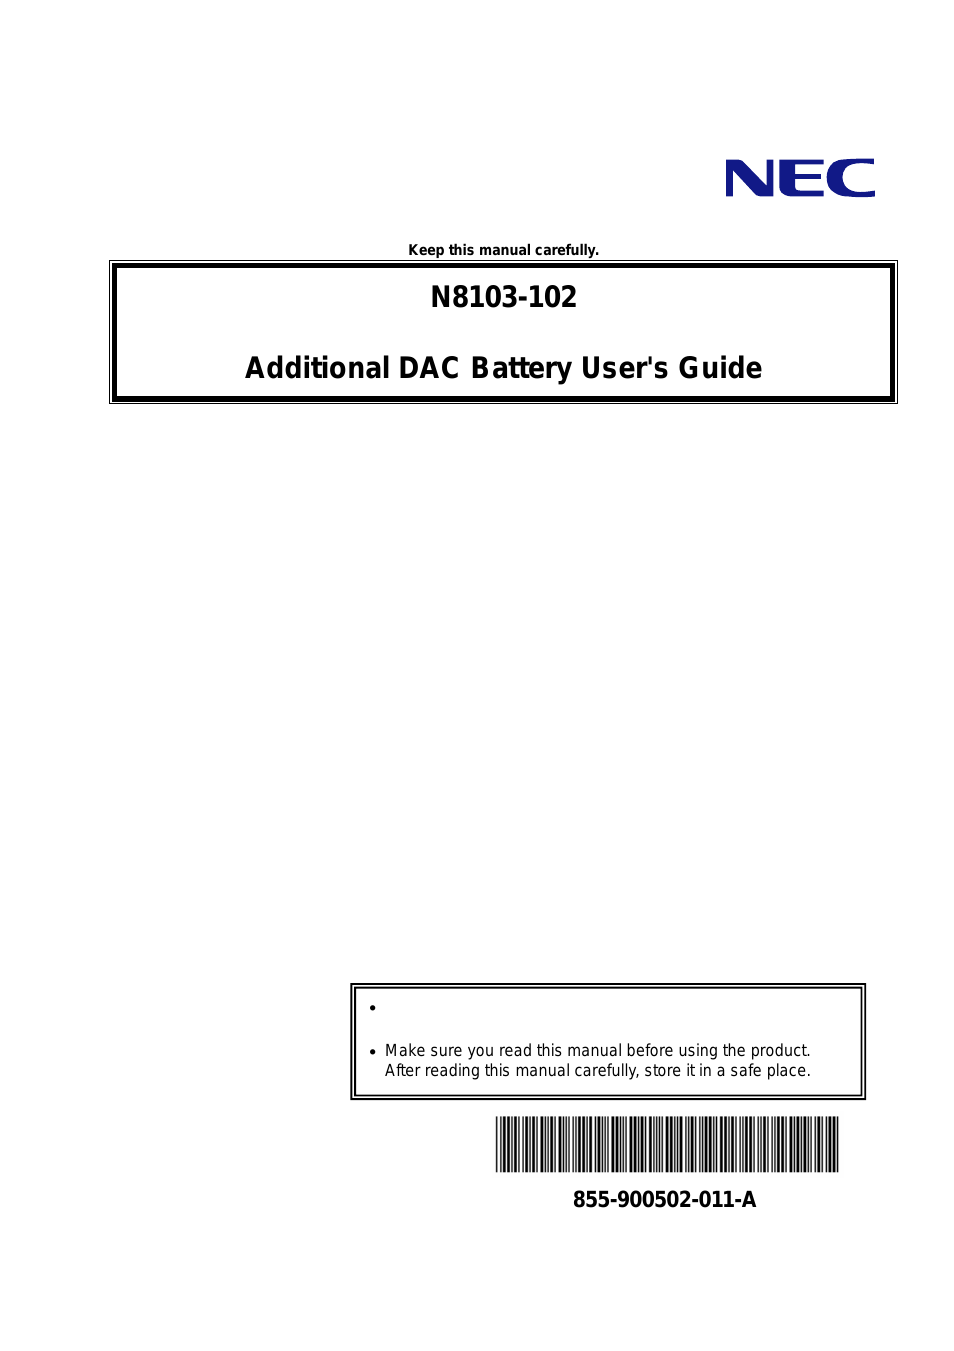 DAC Battery N8103-102